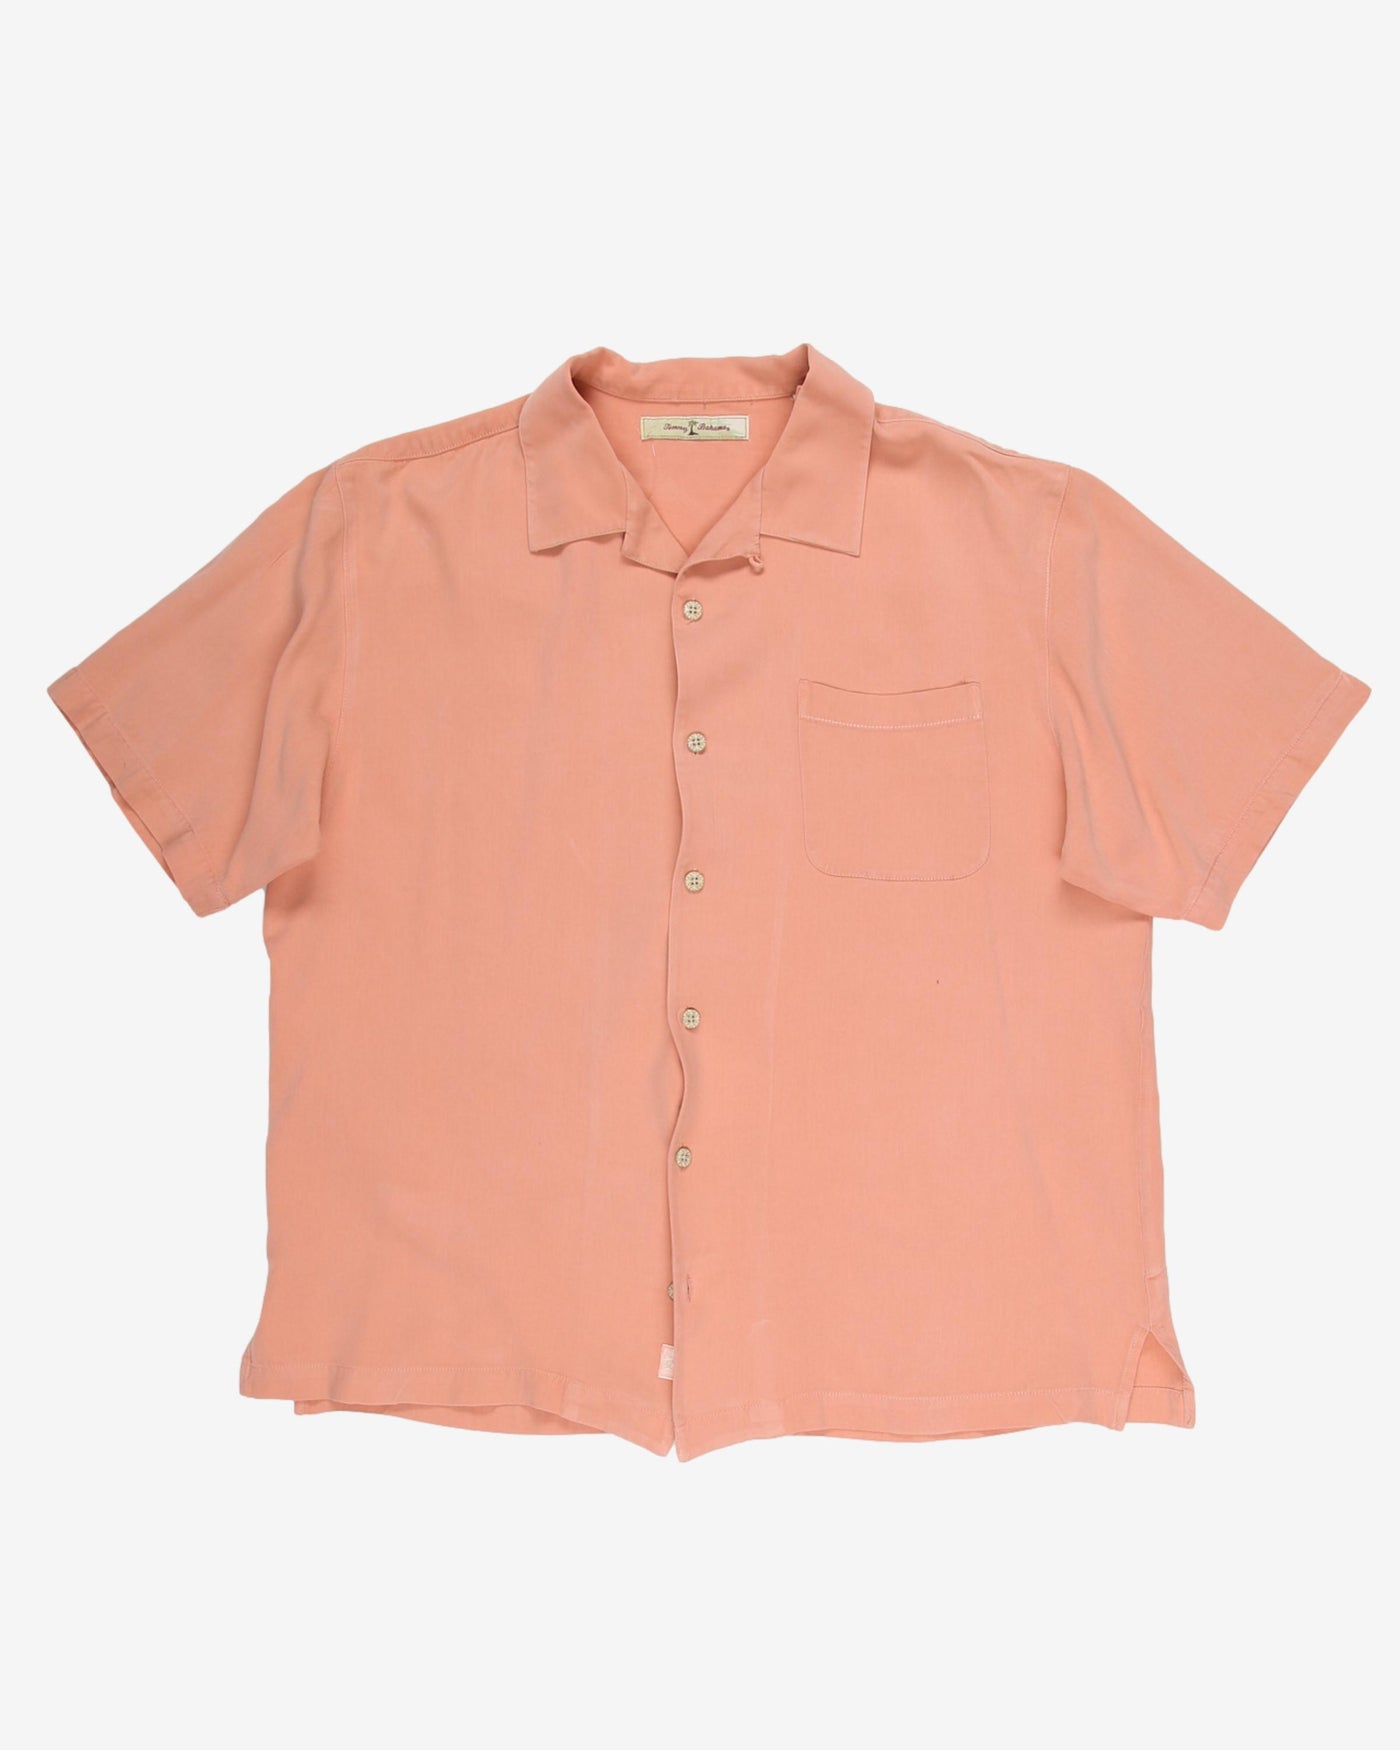 Tommy Bahama silk shirt - L